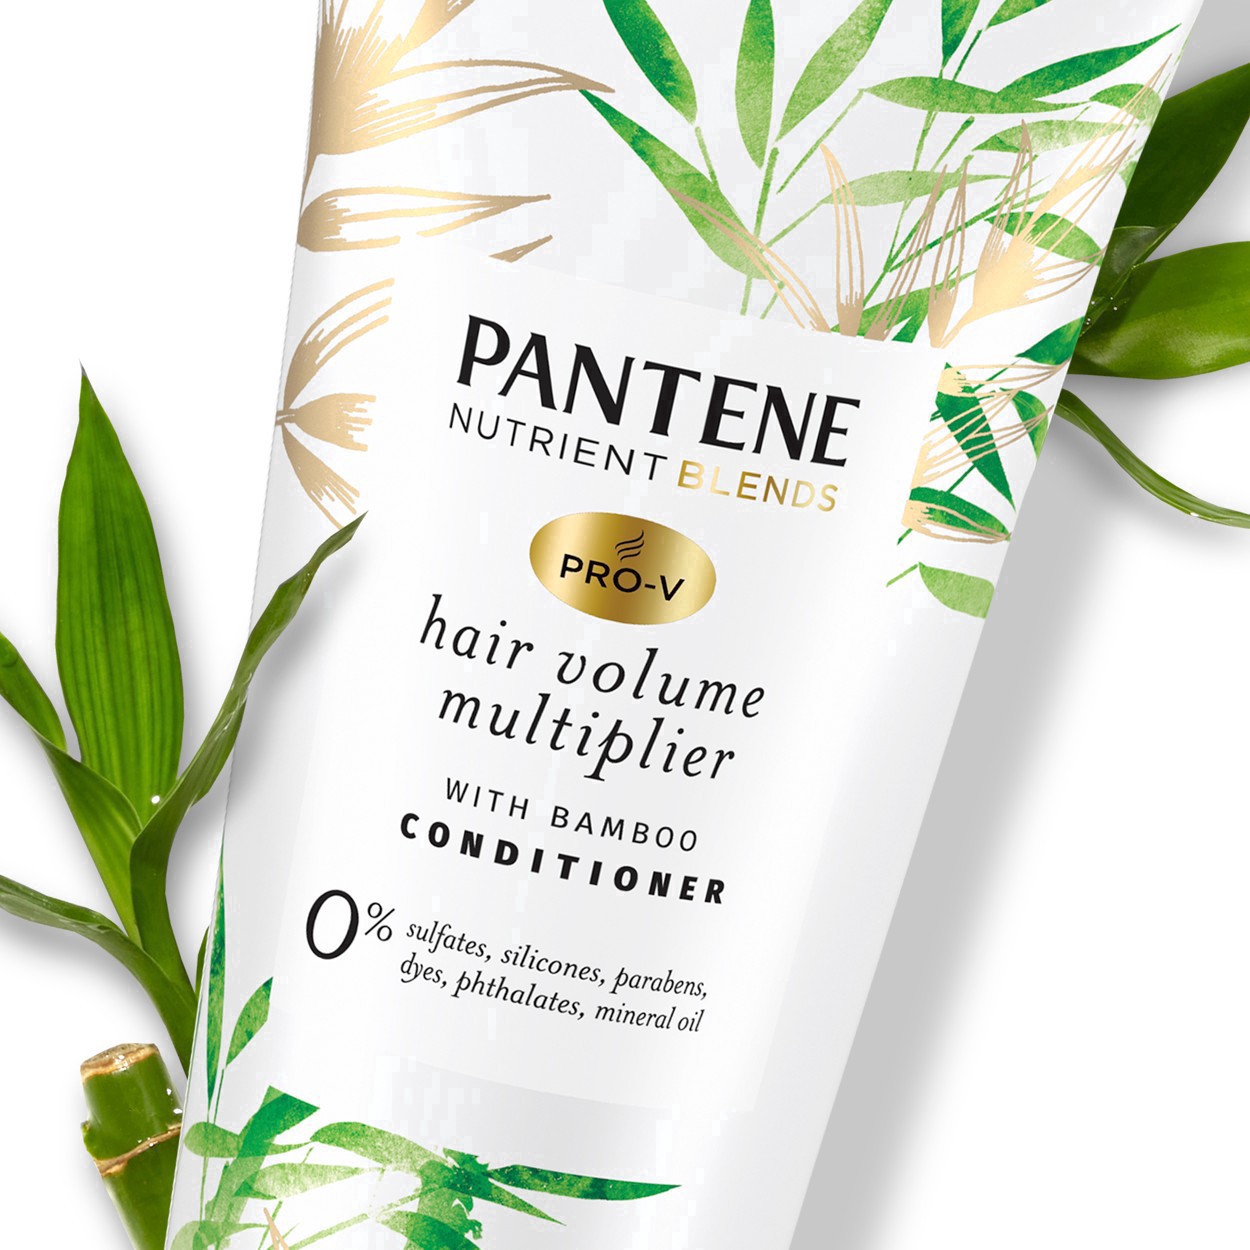 slide 9 of 85, Pantene Nutrient Blends Hair Volume Multiplier Silicone Free Bamboo Conditioner for Fine, Thin Hair, 8.0 fl oz, 8 fl oz